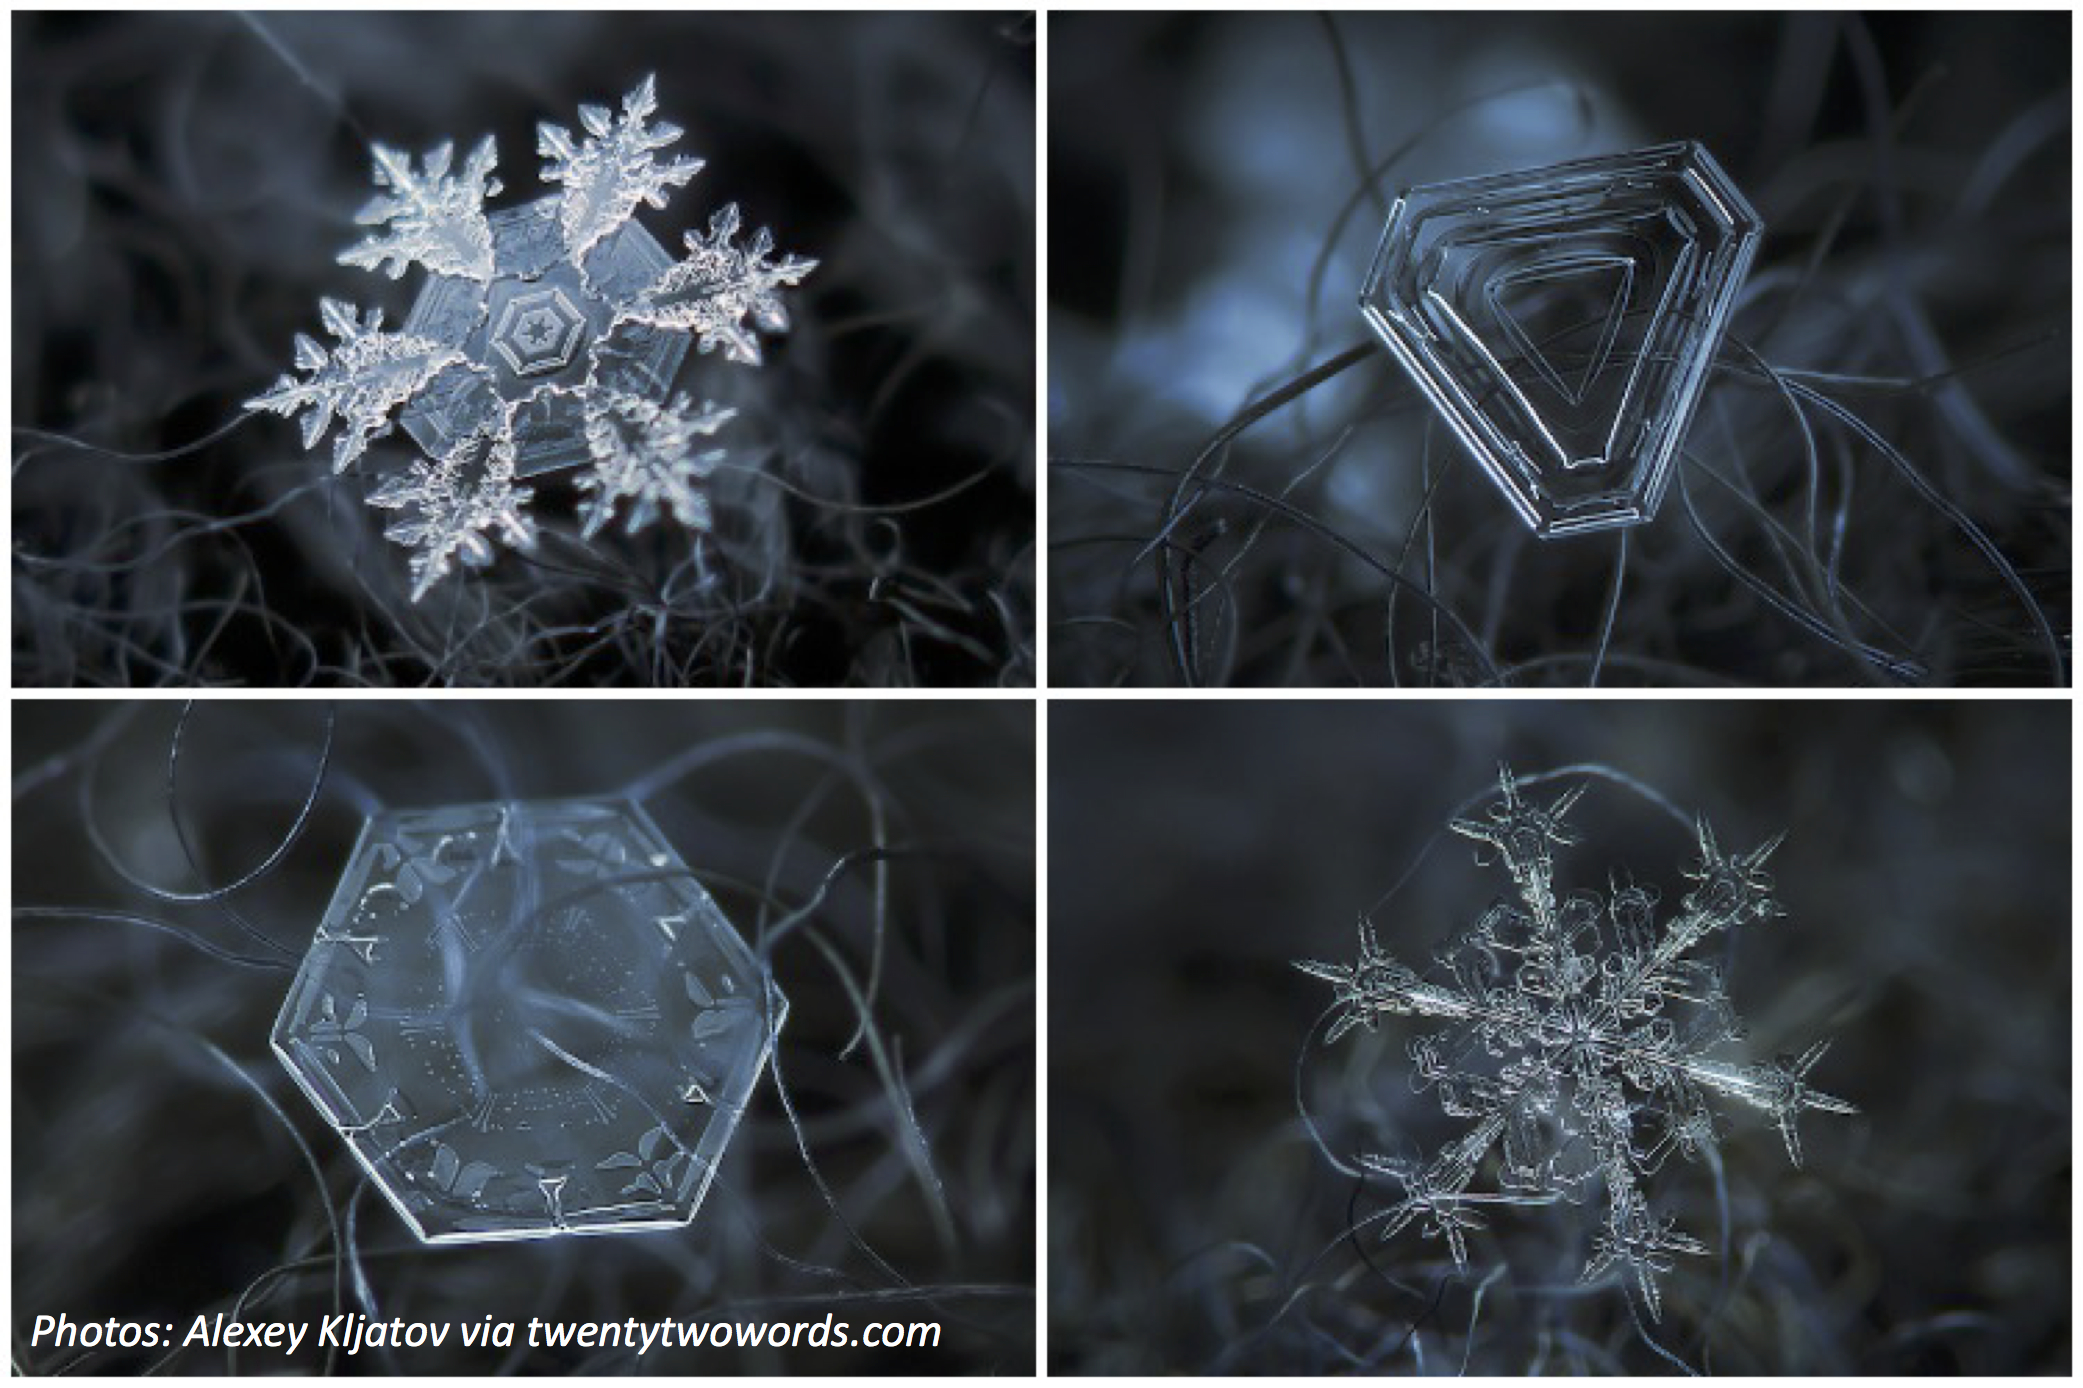 Super-Sized Snowflakes